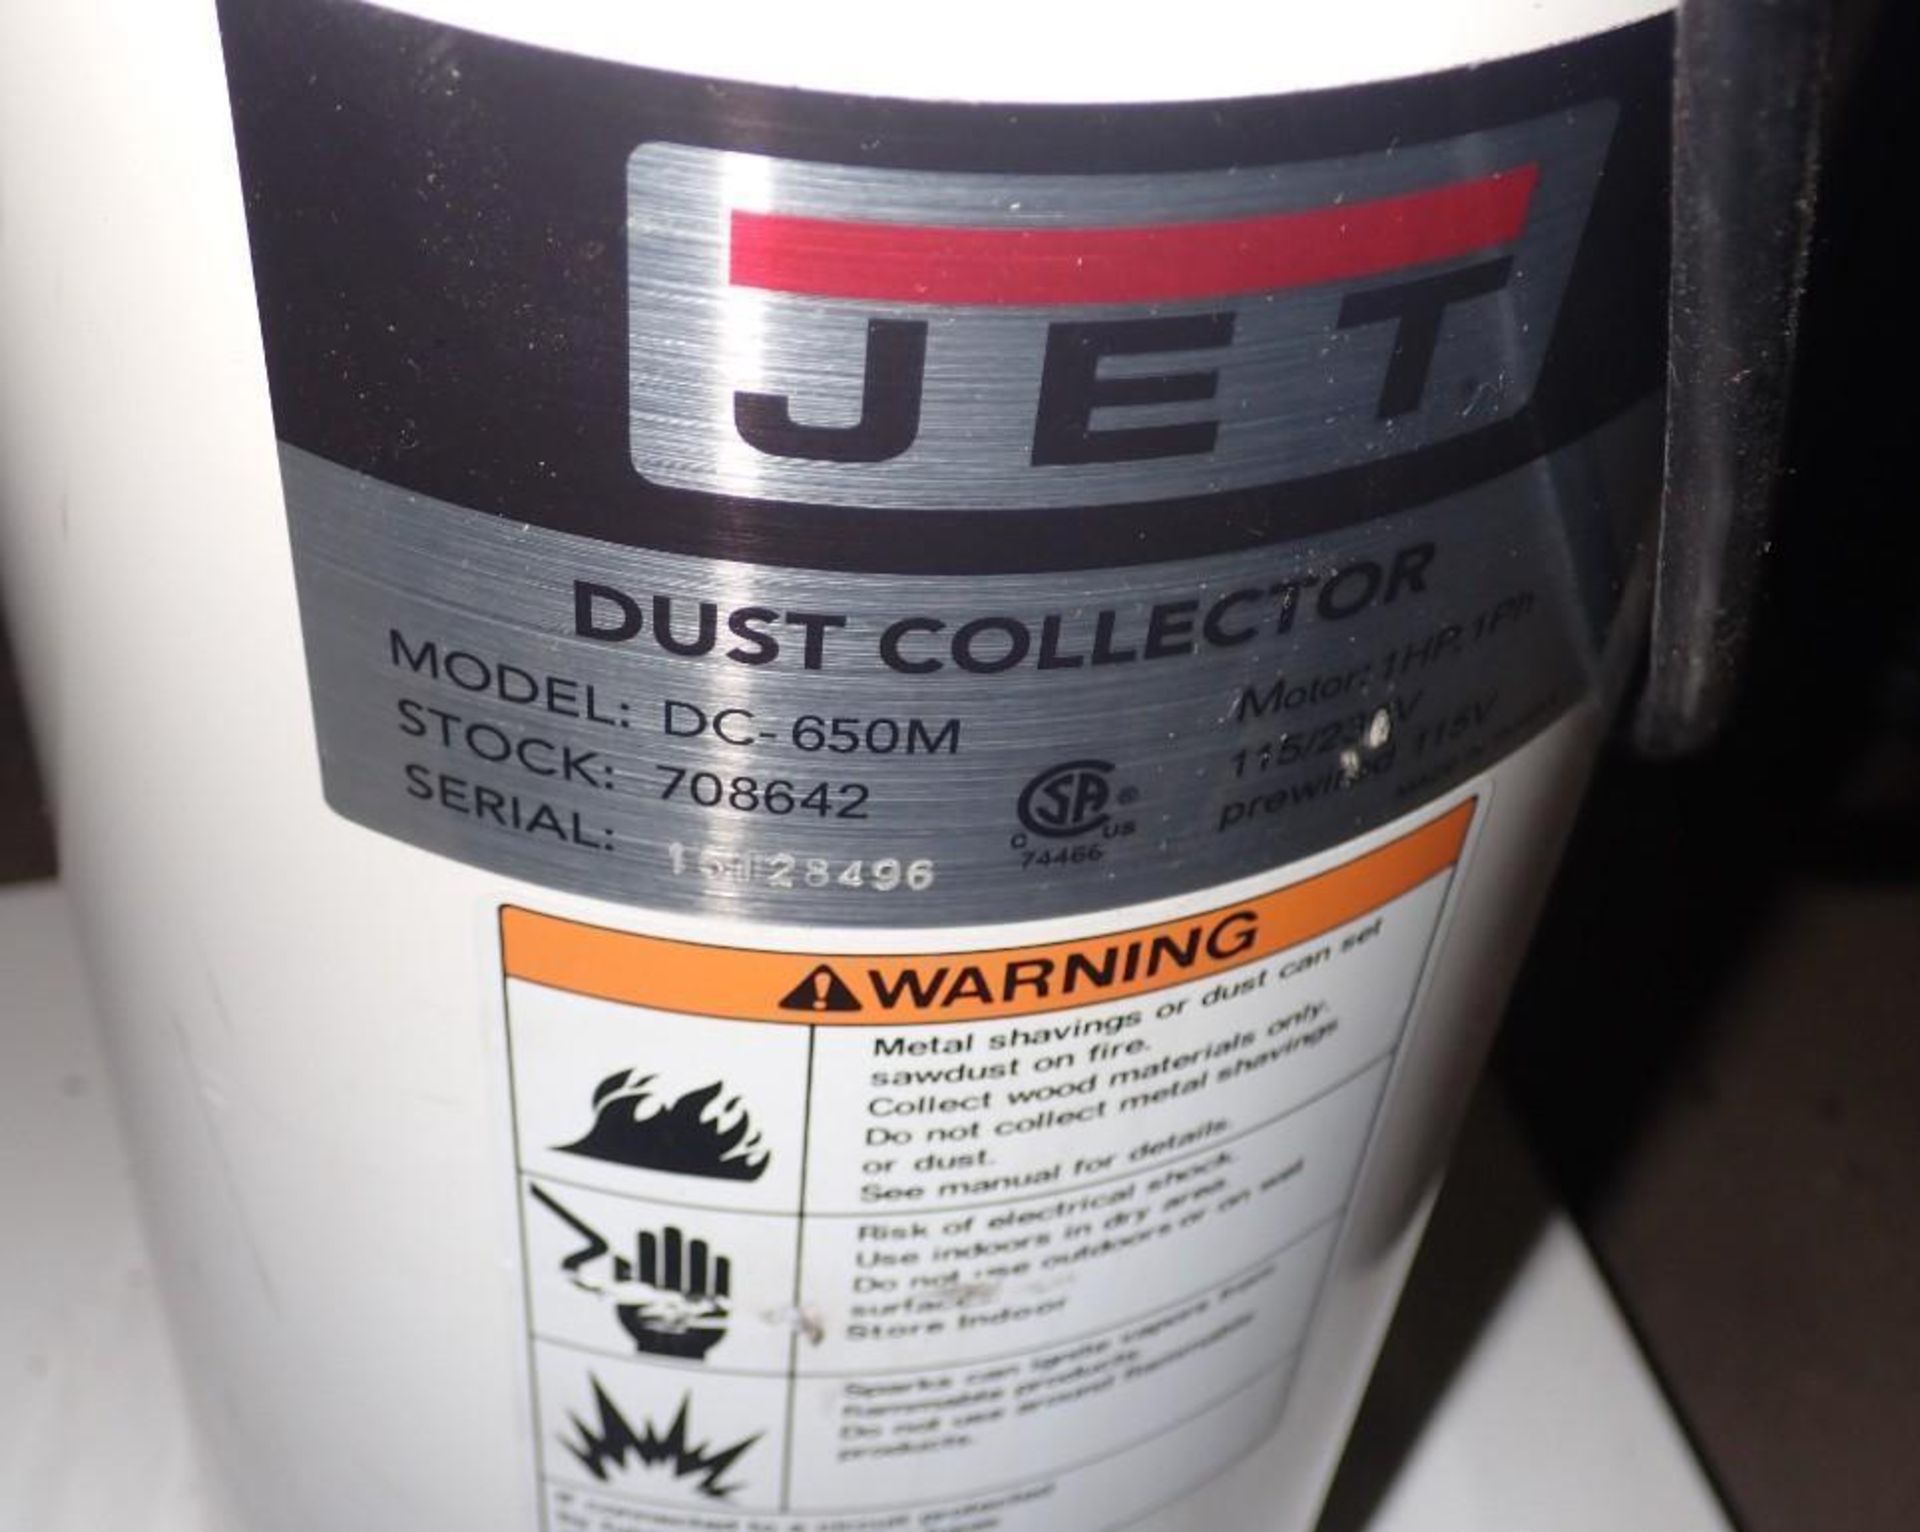 Lot of (2) Jet #DC-650M Dust Collectors - Image 4 of 4